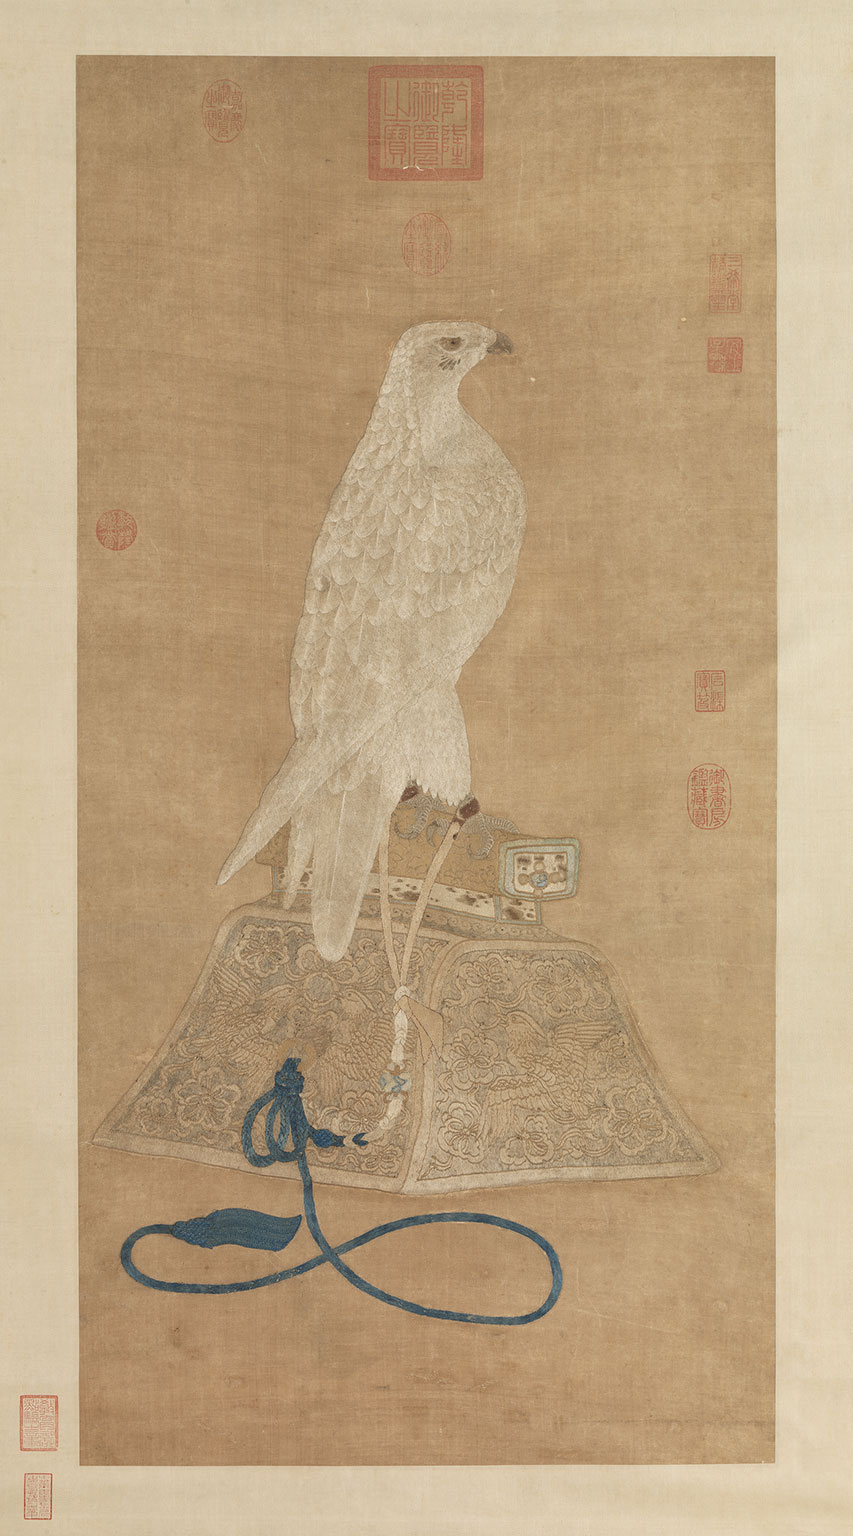 A White Falcon